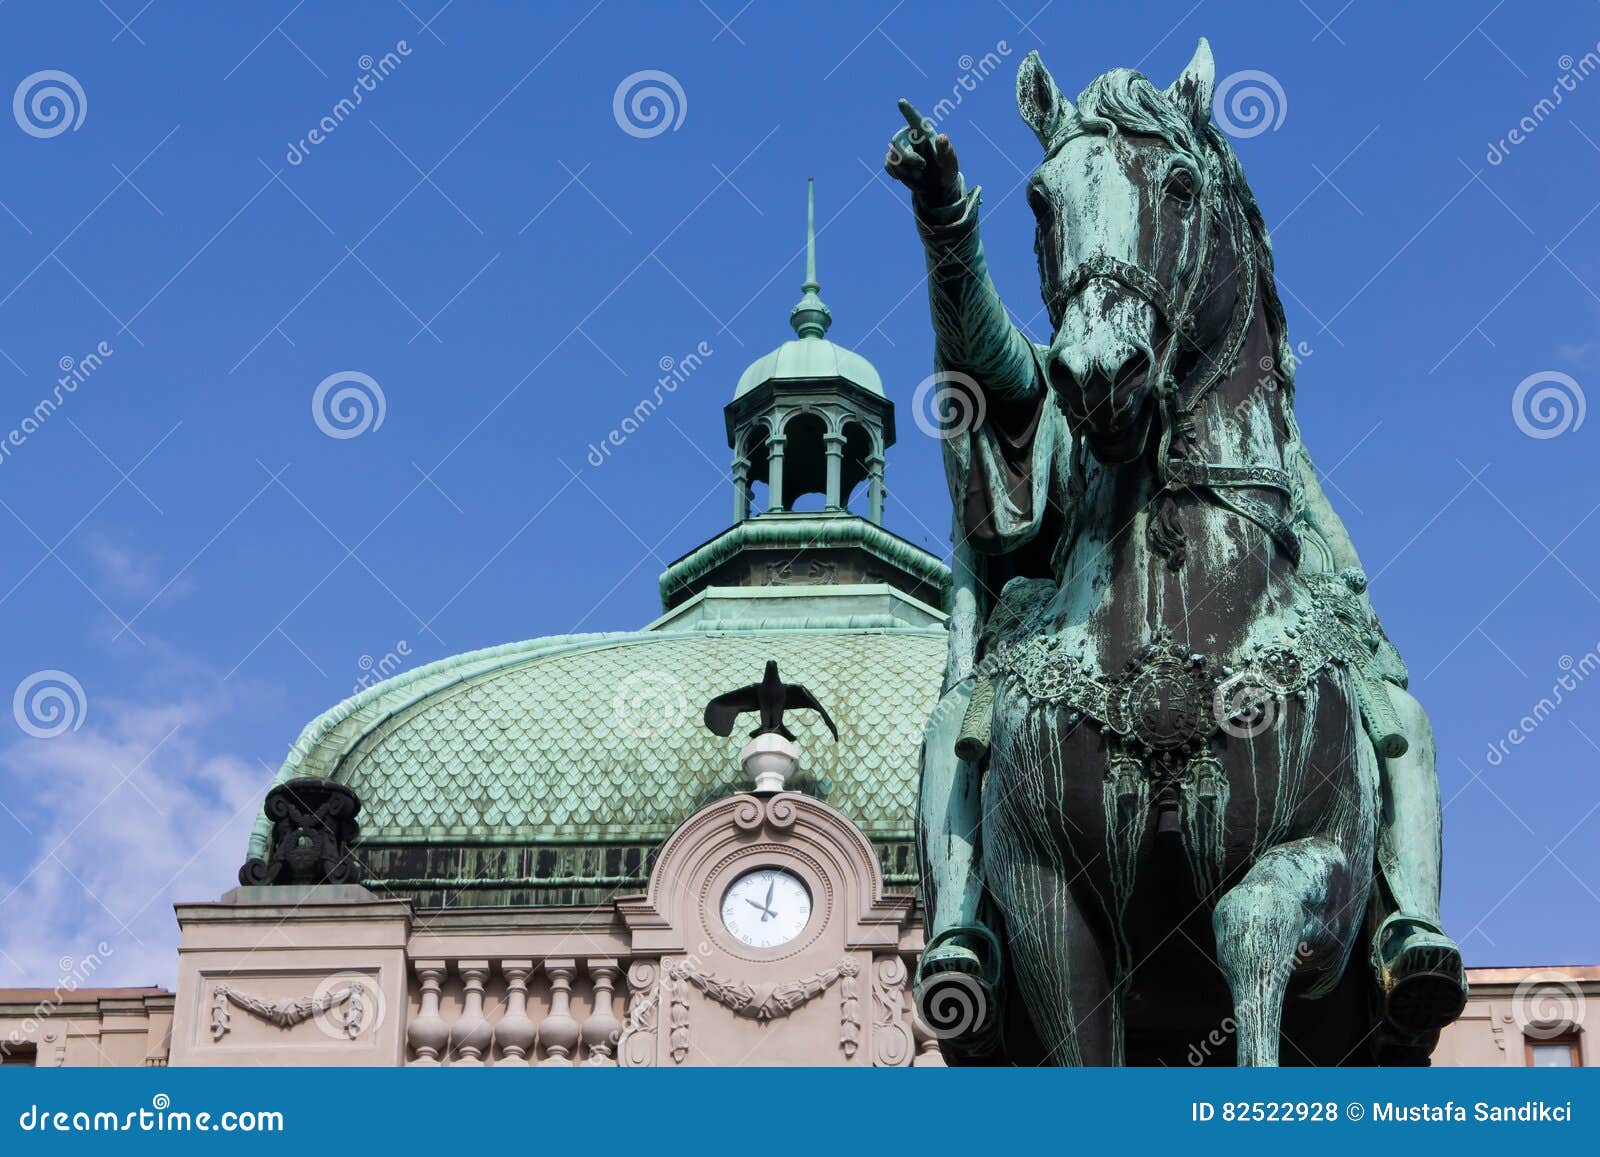 republic square, prince mihailo monument, belgrade